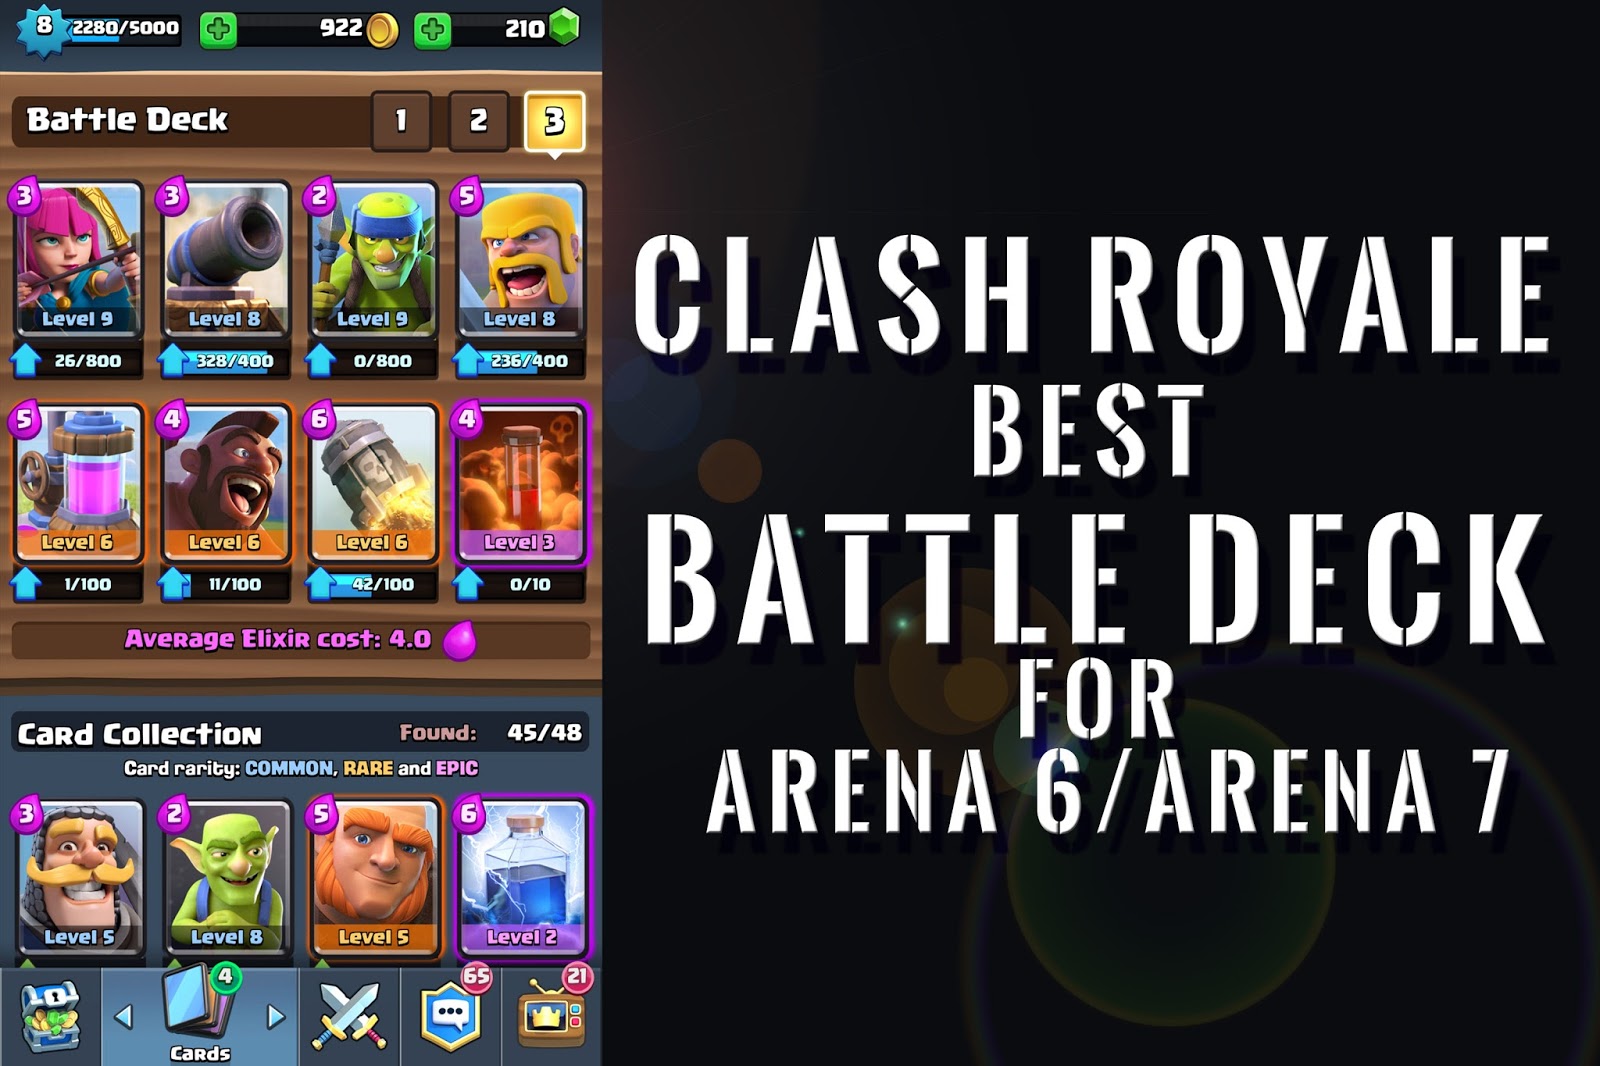 Clash Royale Best Battle Deck For Arena 6 Arena 7